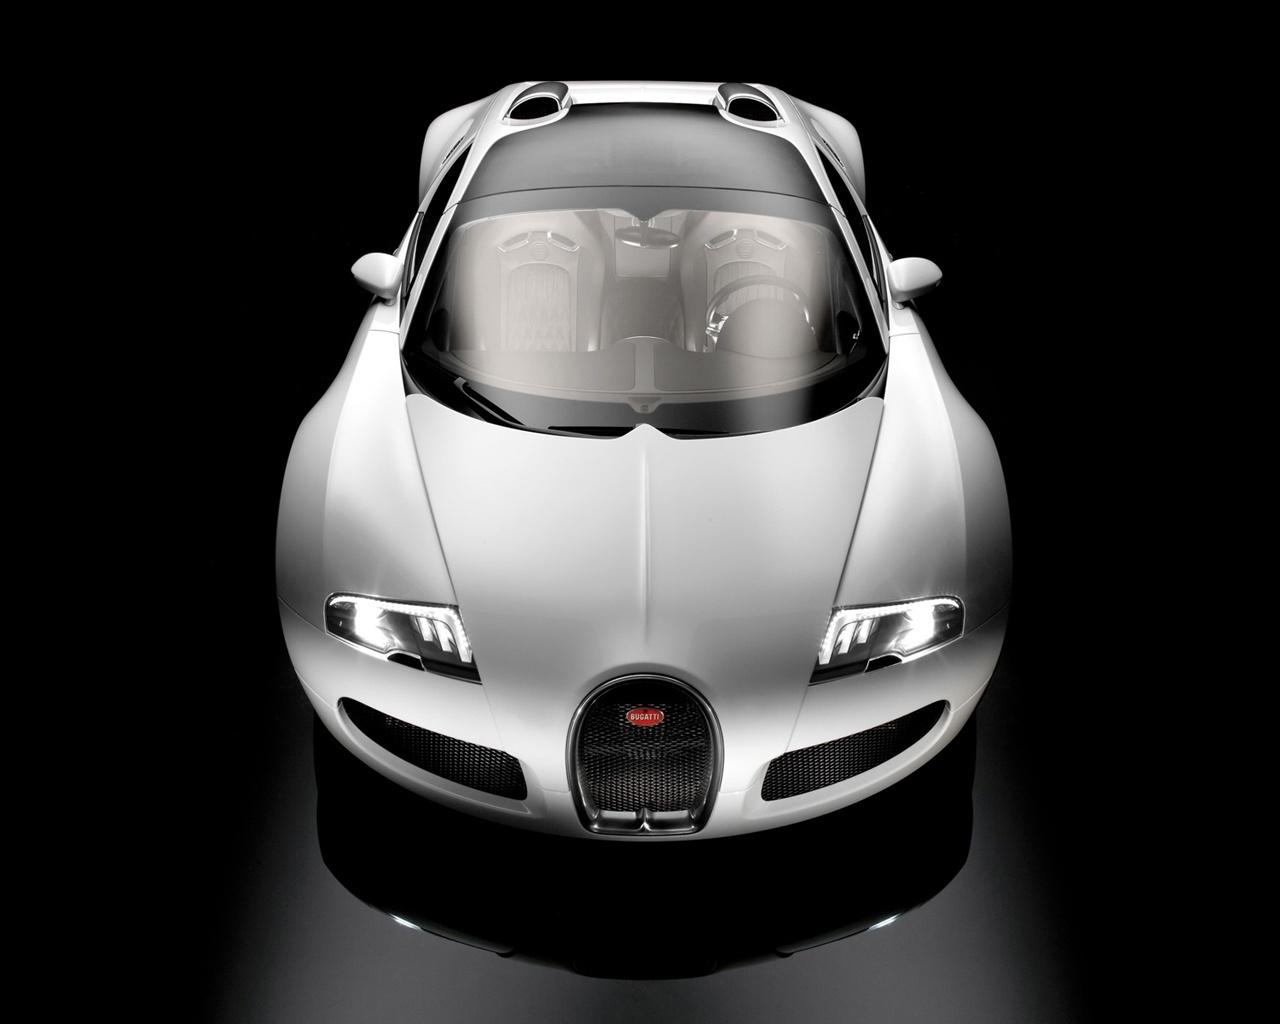 Bugatti Veyron 16.4 Grand Sport 2009 - Front Top Studio for 1280 x 1024 resolution